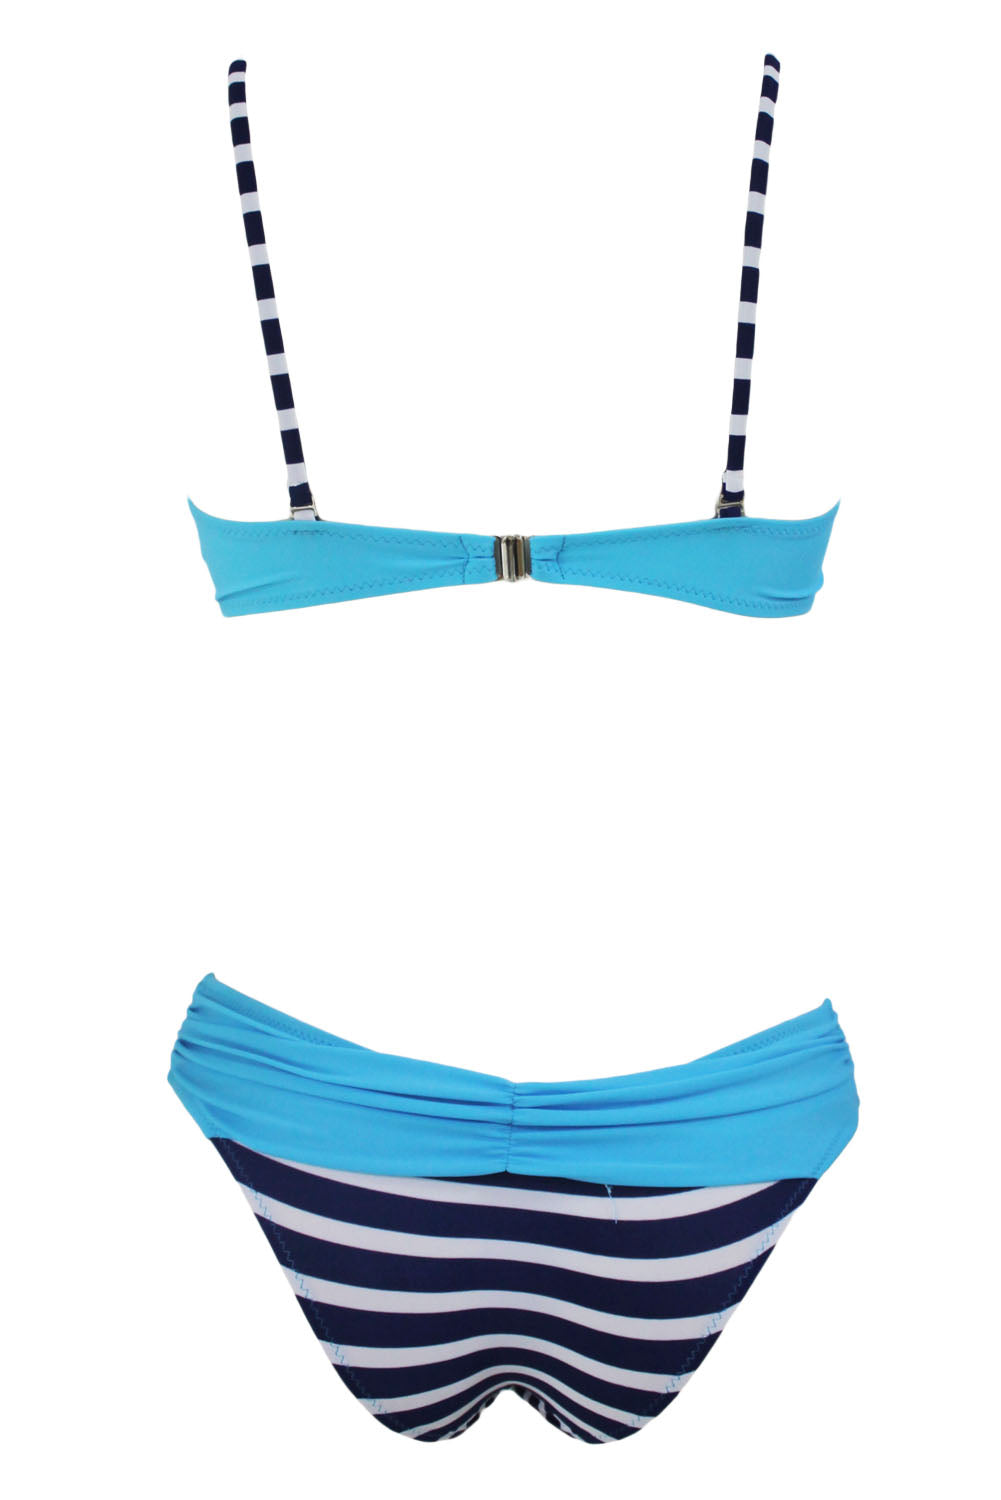 Črtasto modre podložene naborne bikini komplete